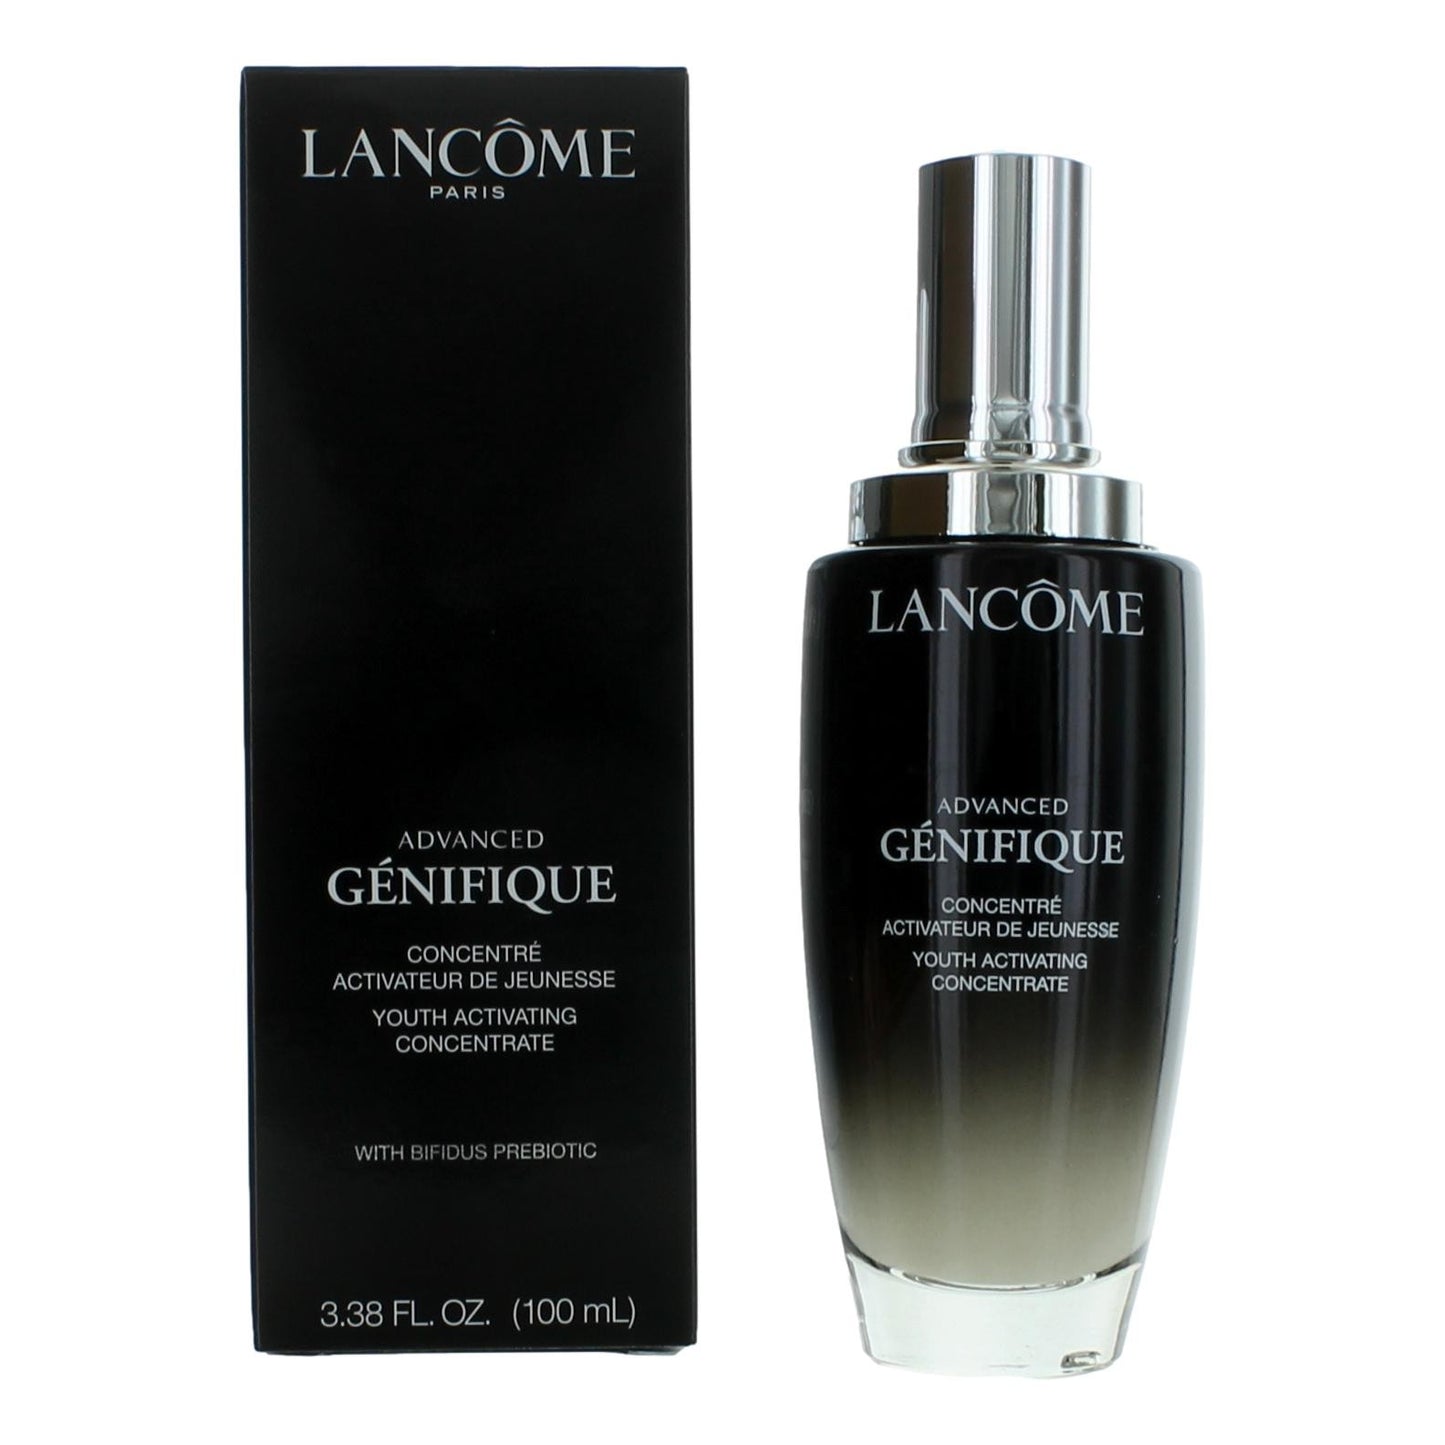 Lancome Advanced Genifique by Lancome